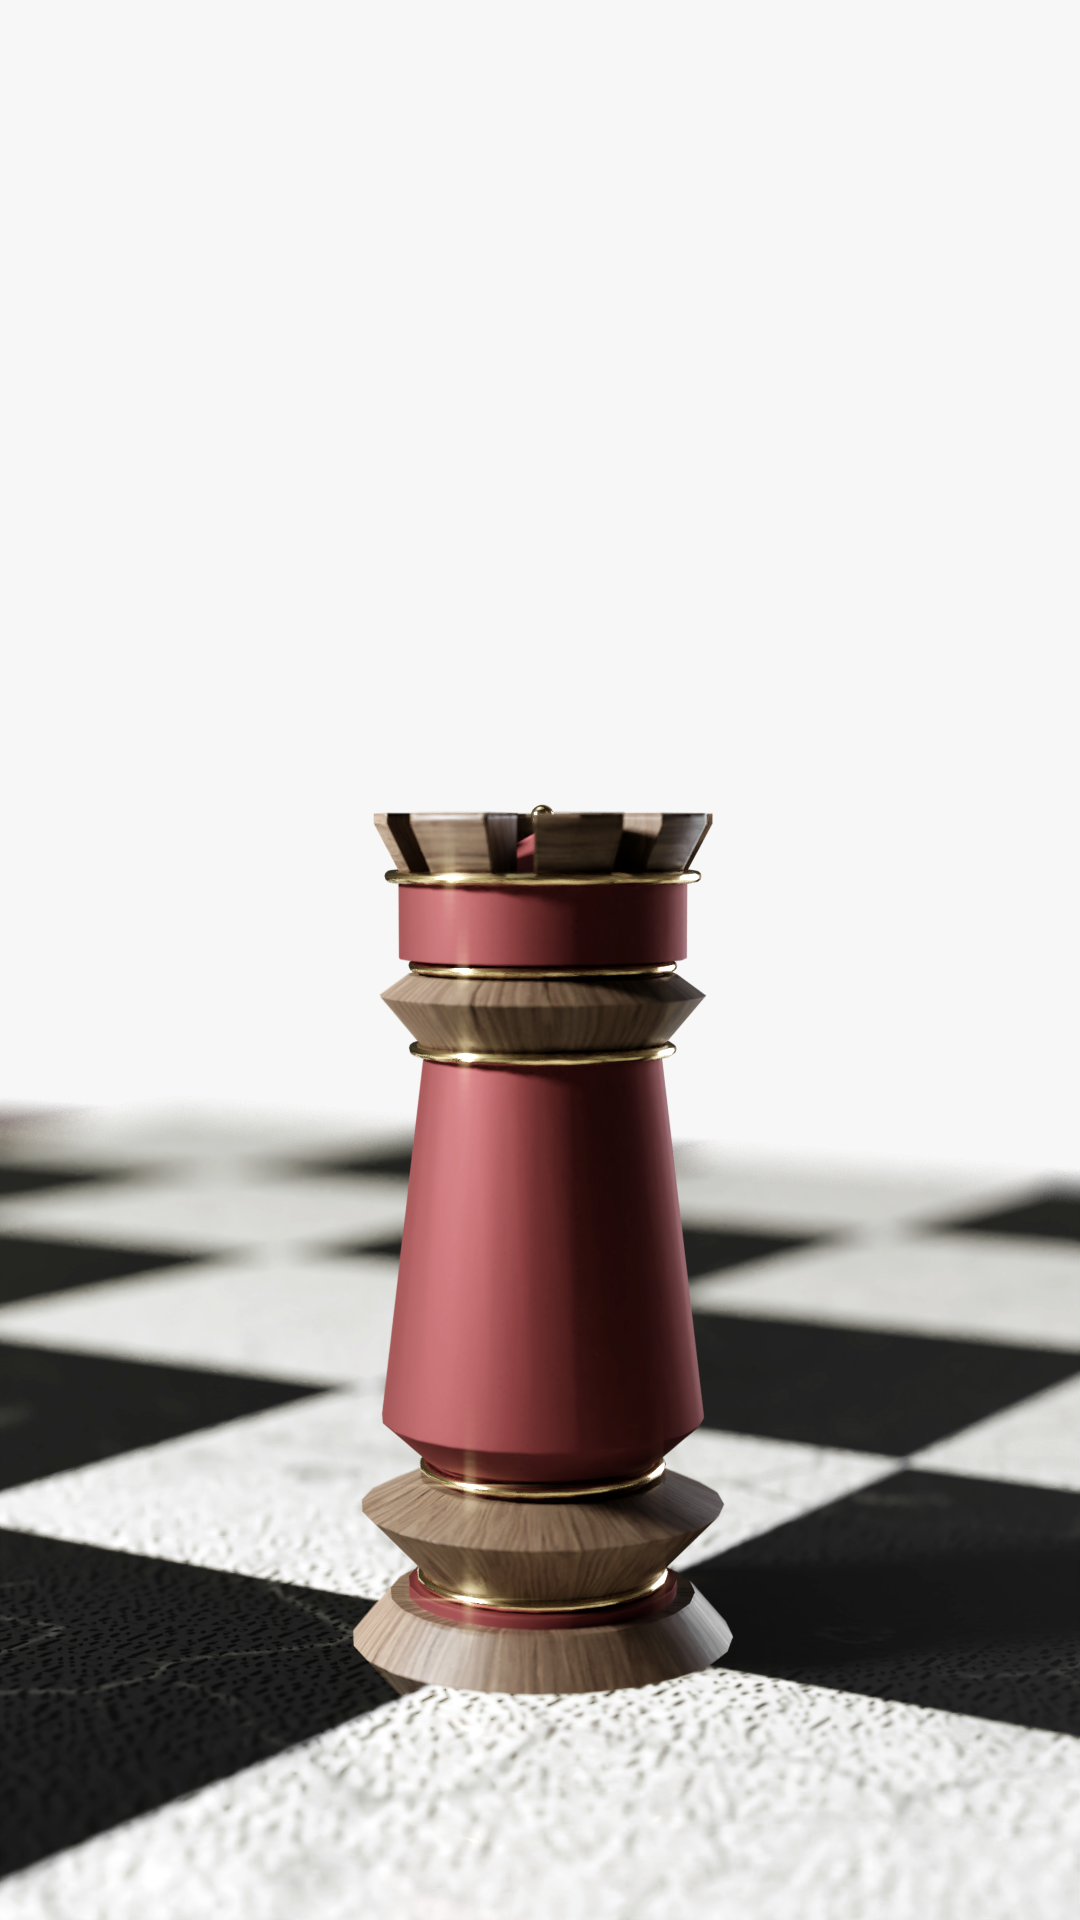 Elegant Chess Board - 3D rendered Live Wallpaper - free download